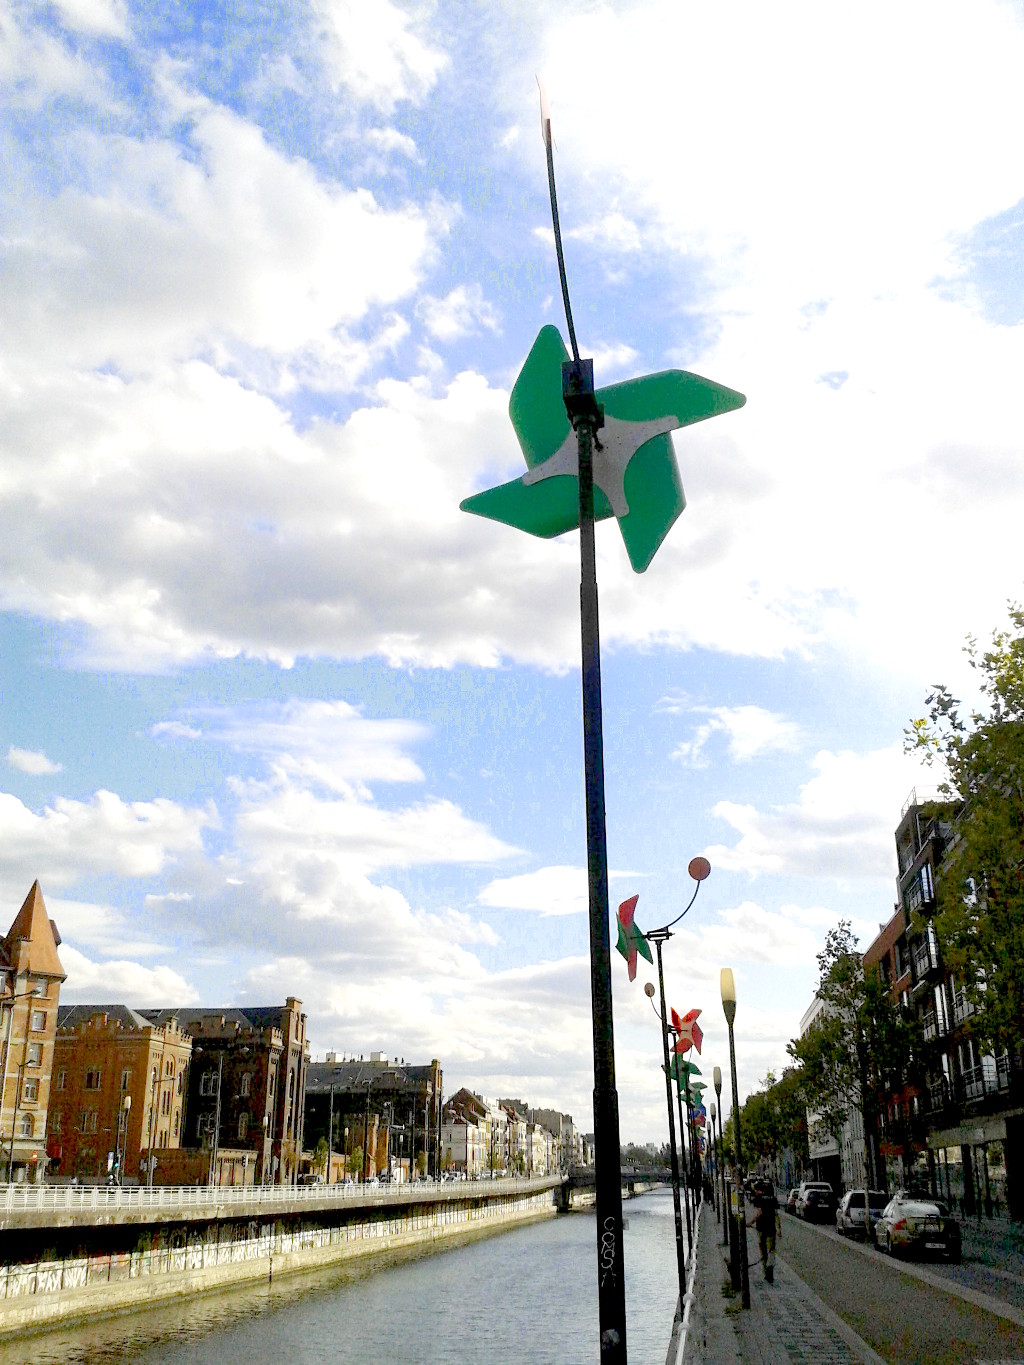 The Quai des Charbonnages besides the canal in Molenbeek, Belgium. Windmill sculptures adorn its banks.